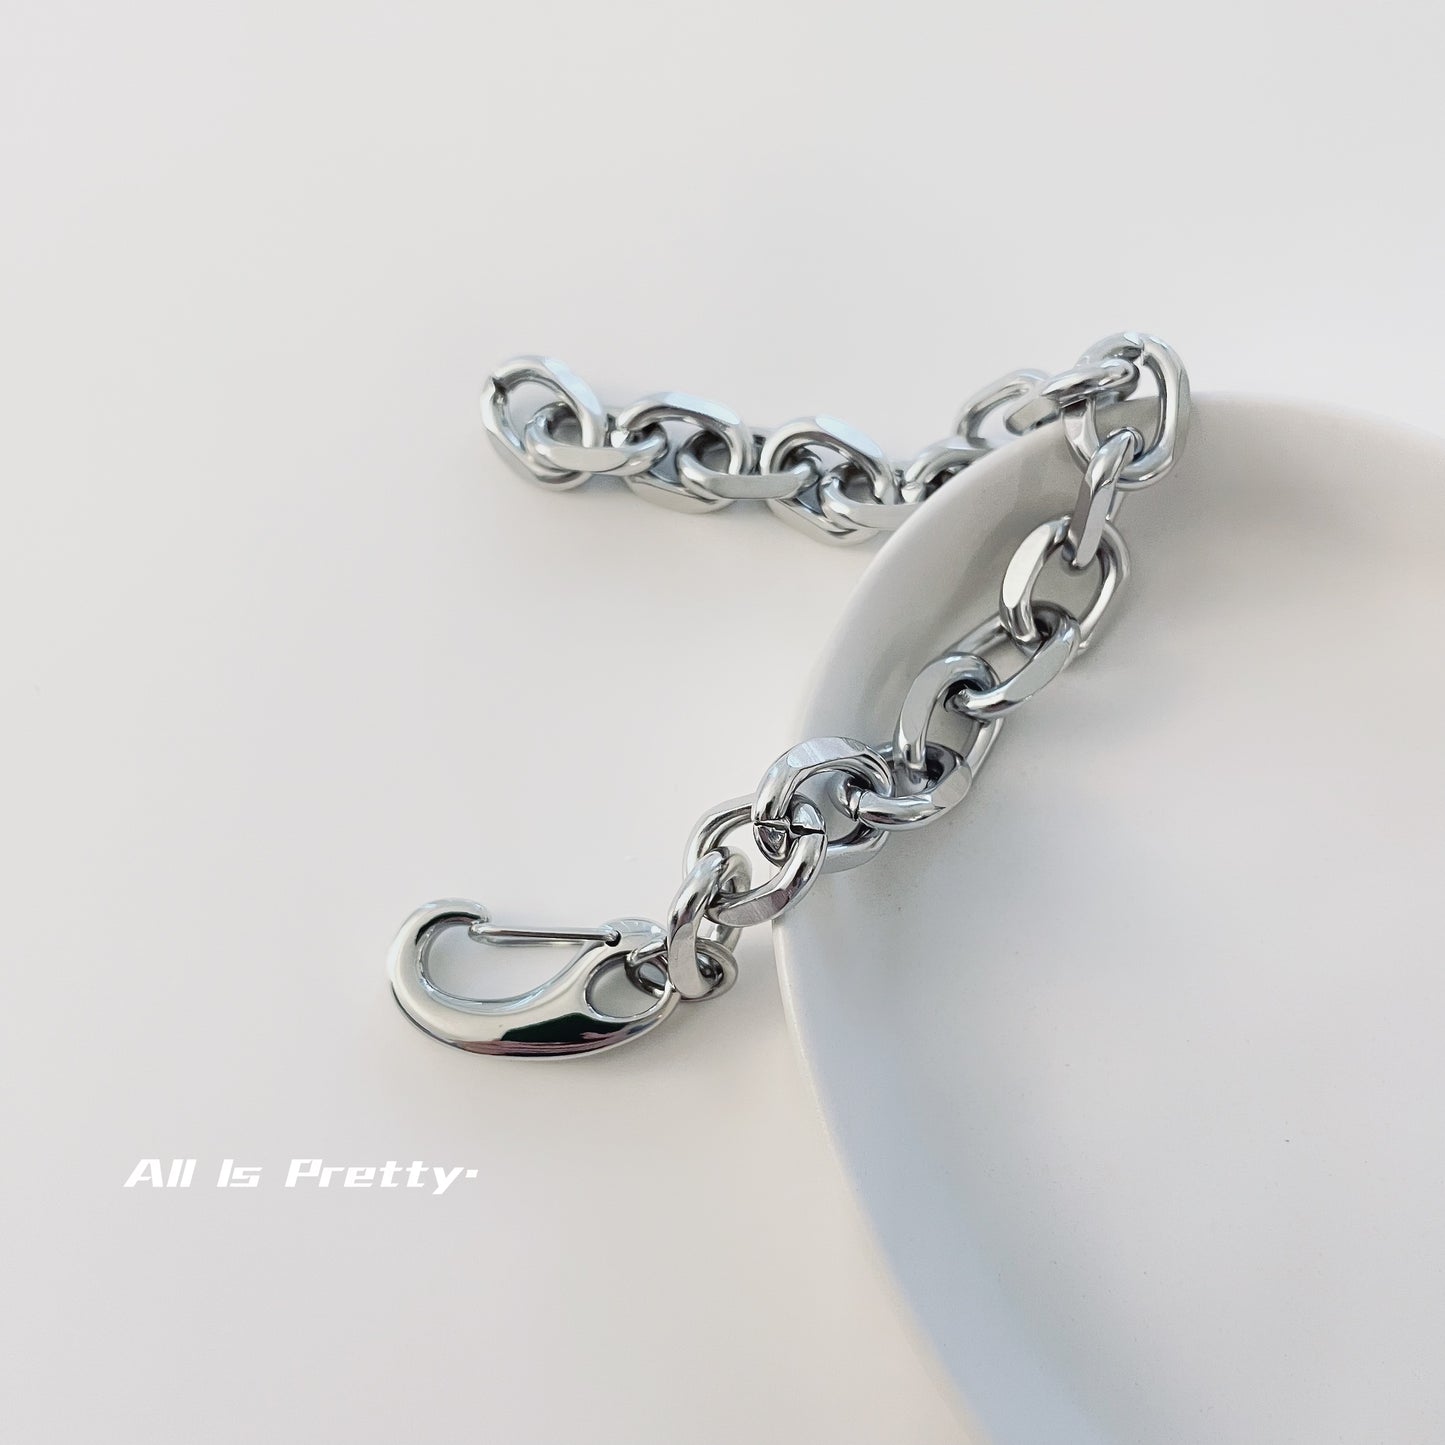 Chunky chain bracelet